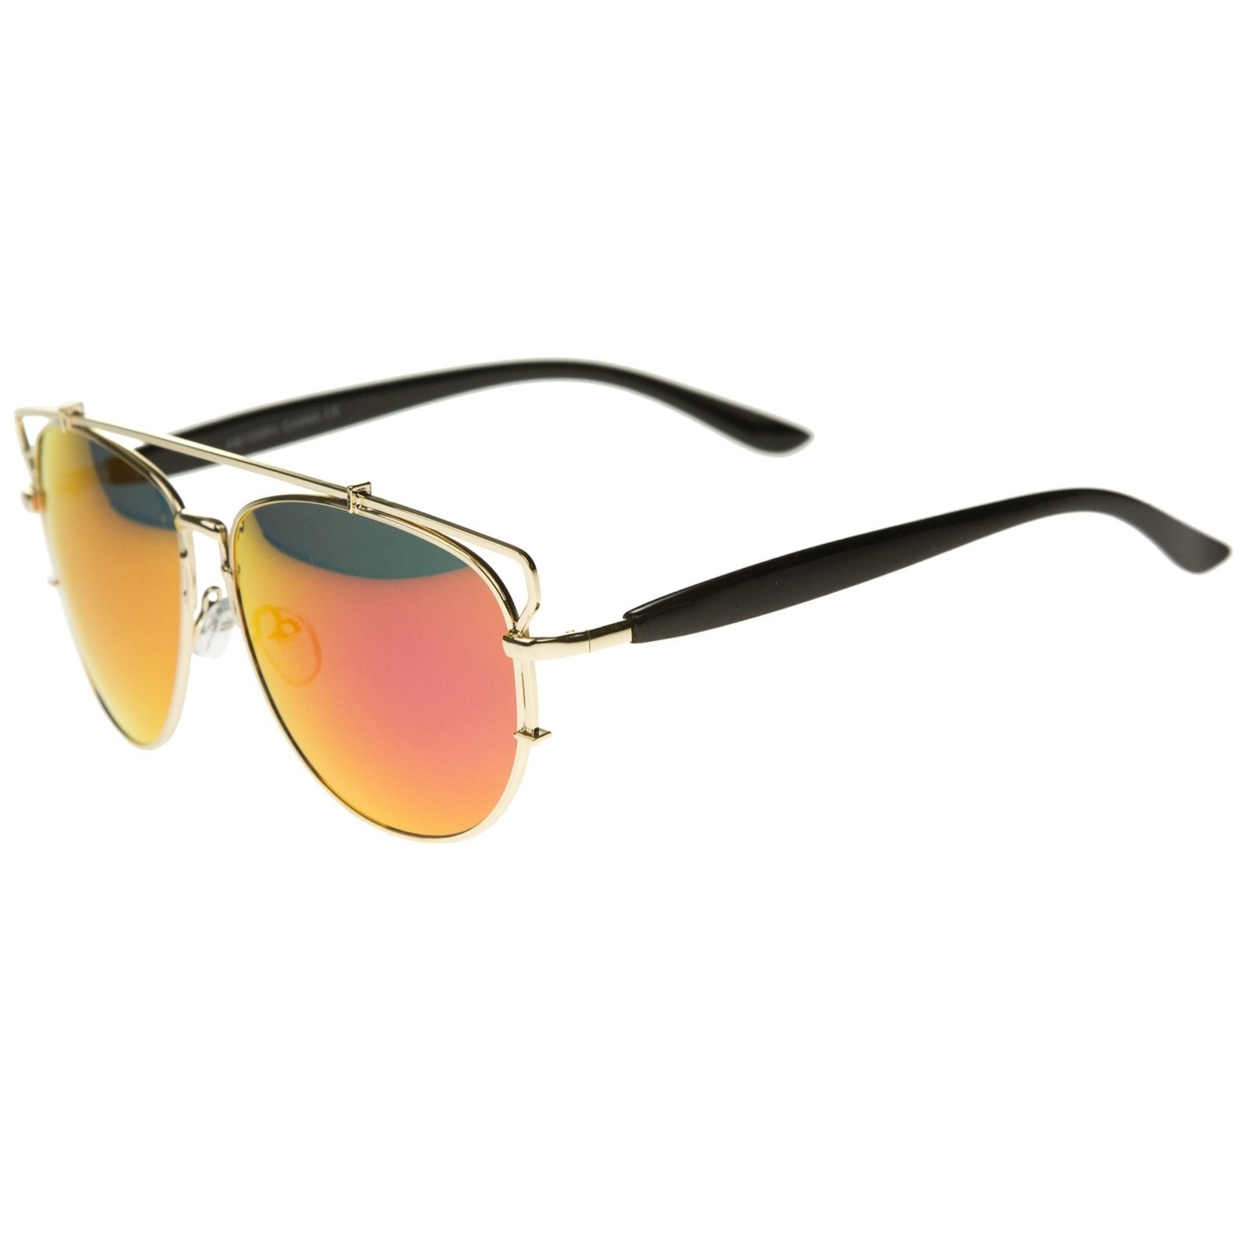 Modern Full Metal Crossbar Open Design Colored Mirror Aviator Sunglasses 58mm - Silver / Orange Mirror